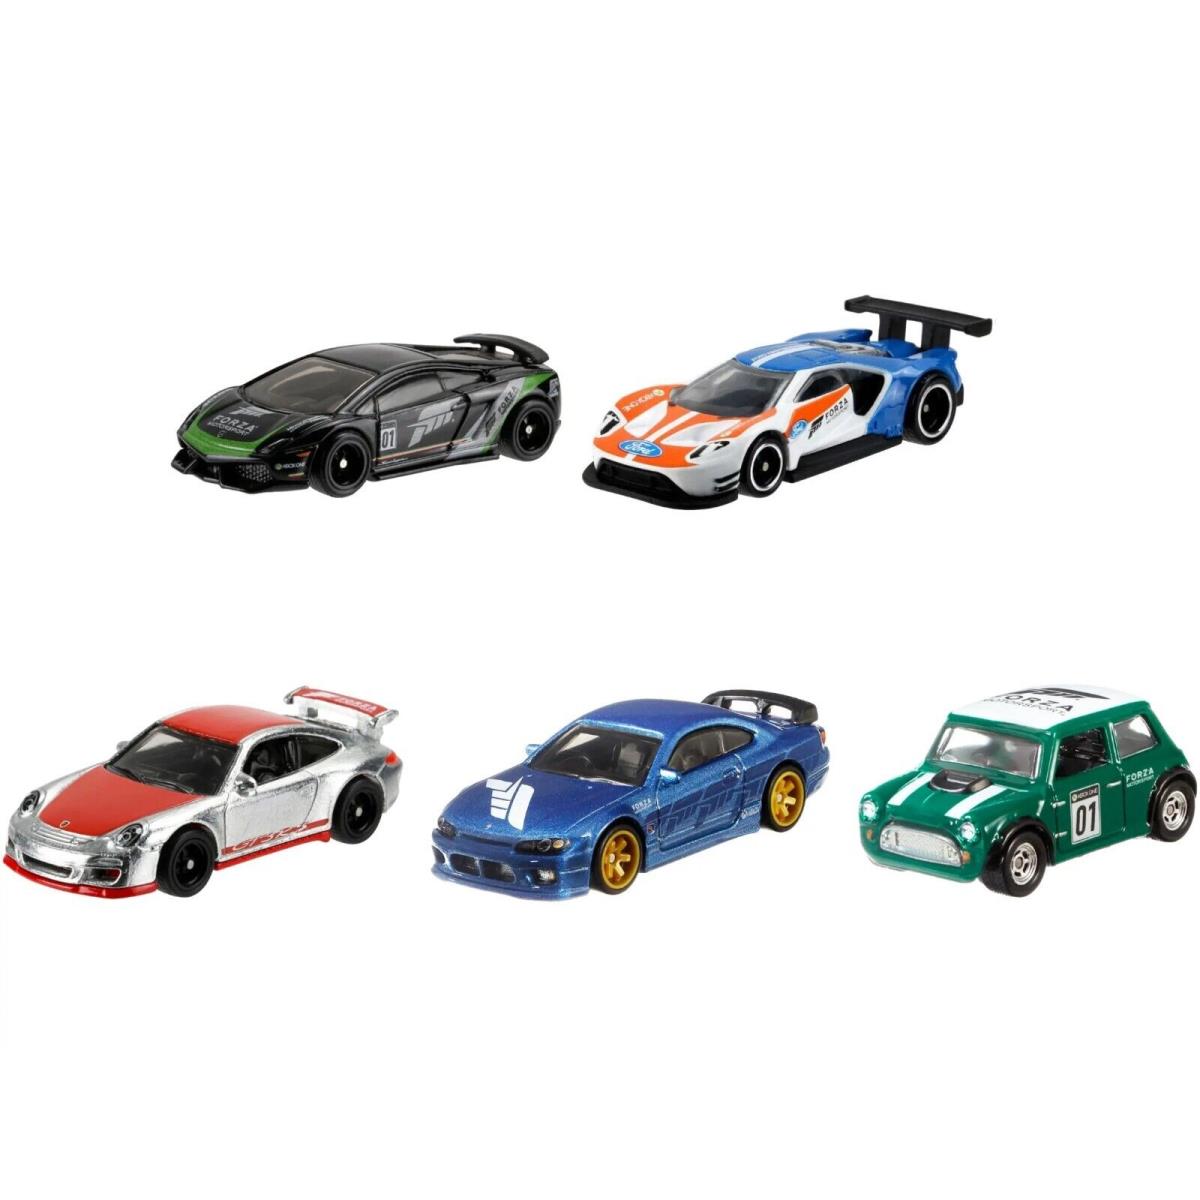 Hot Wheels Premium Forza Motorsport 1:64 Scale Die-cast Car Model Toys Set of 5 - 